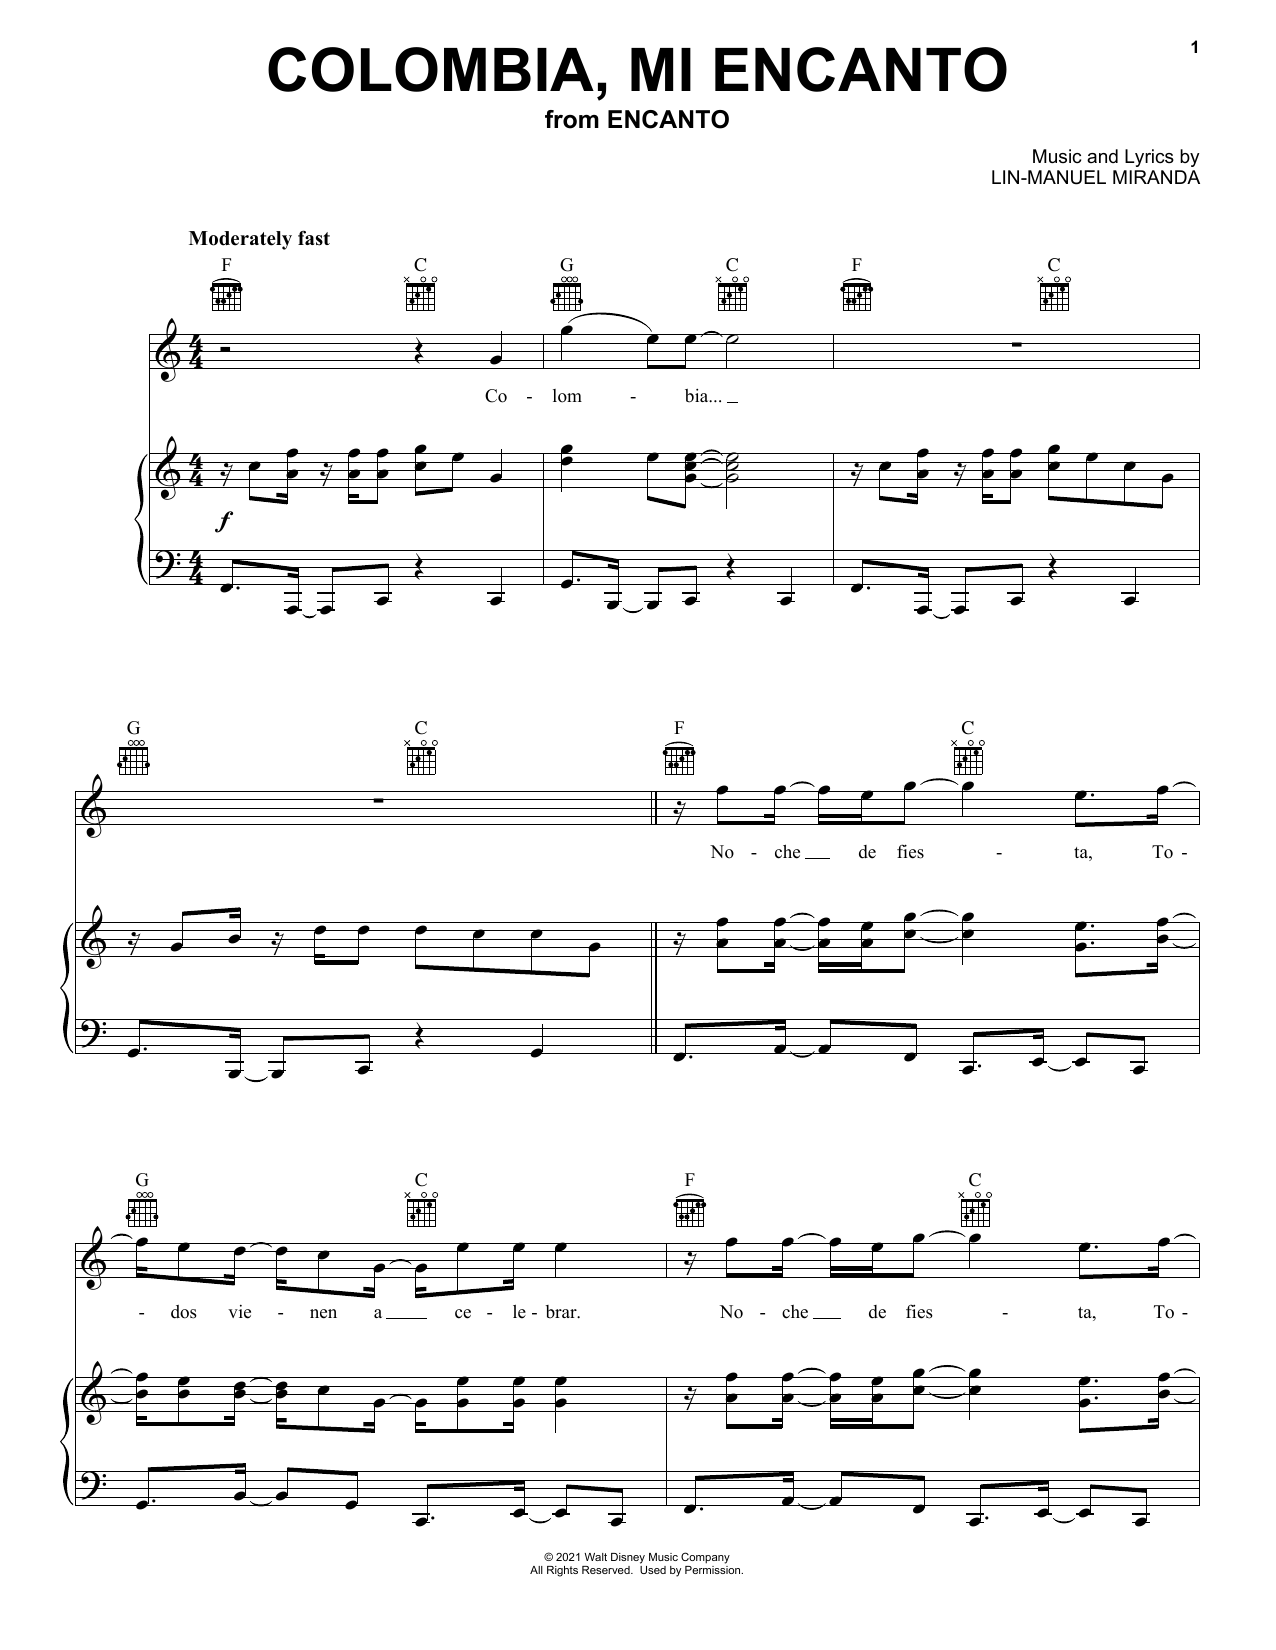 Lin-Manuel Miranda Colombia, Mi Encanto (from Encanto) Sheet Music Notes & Chords for Alto Sax Solo - Download or Print PDF